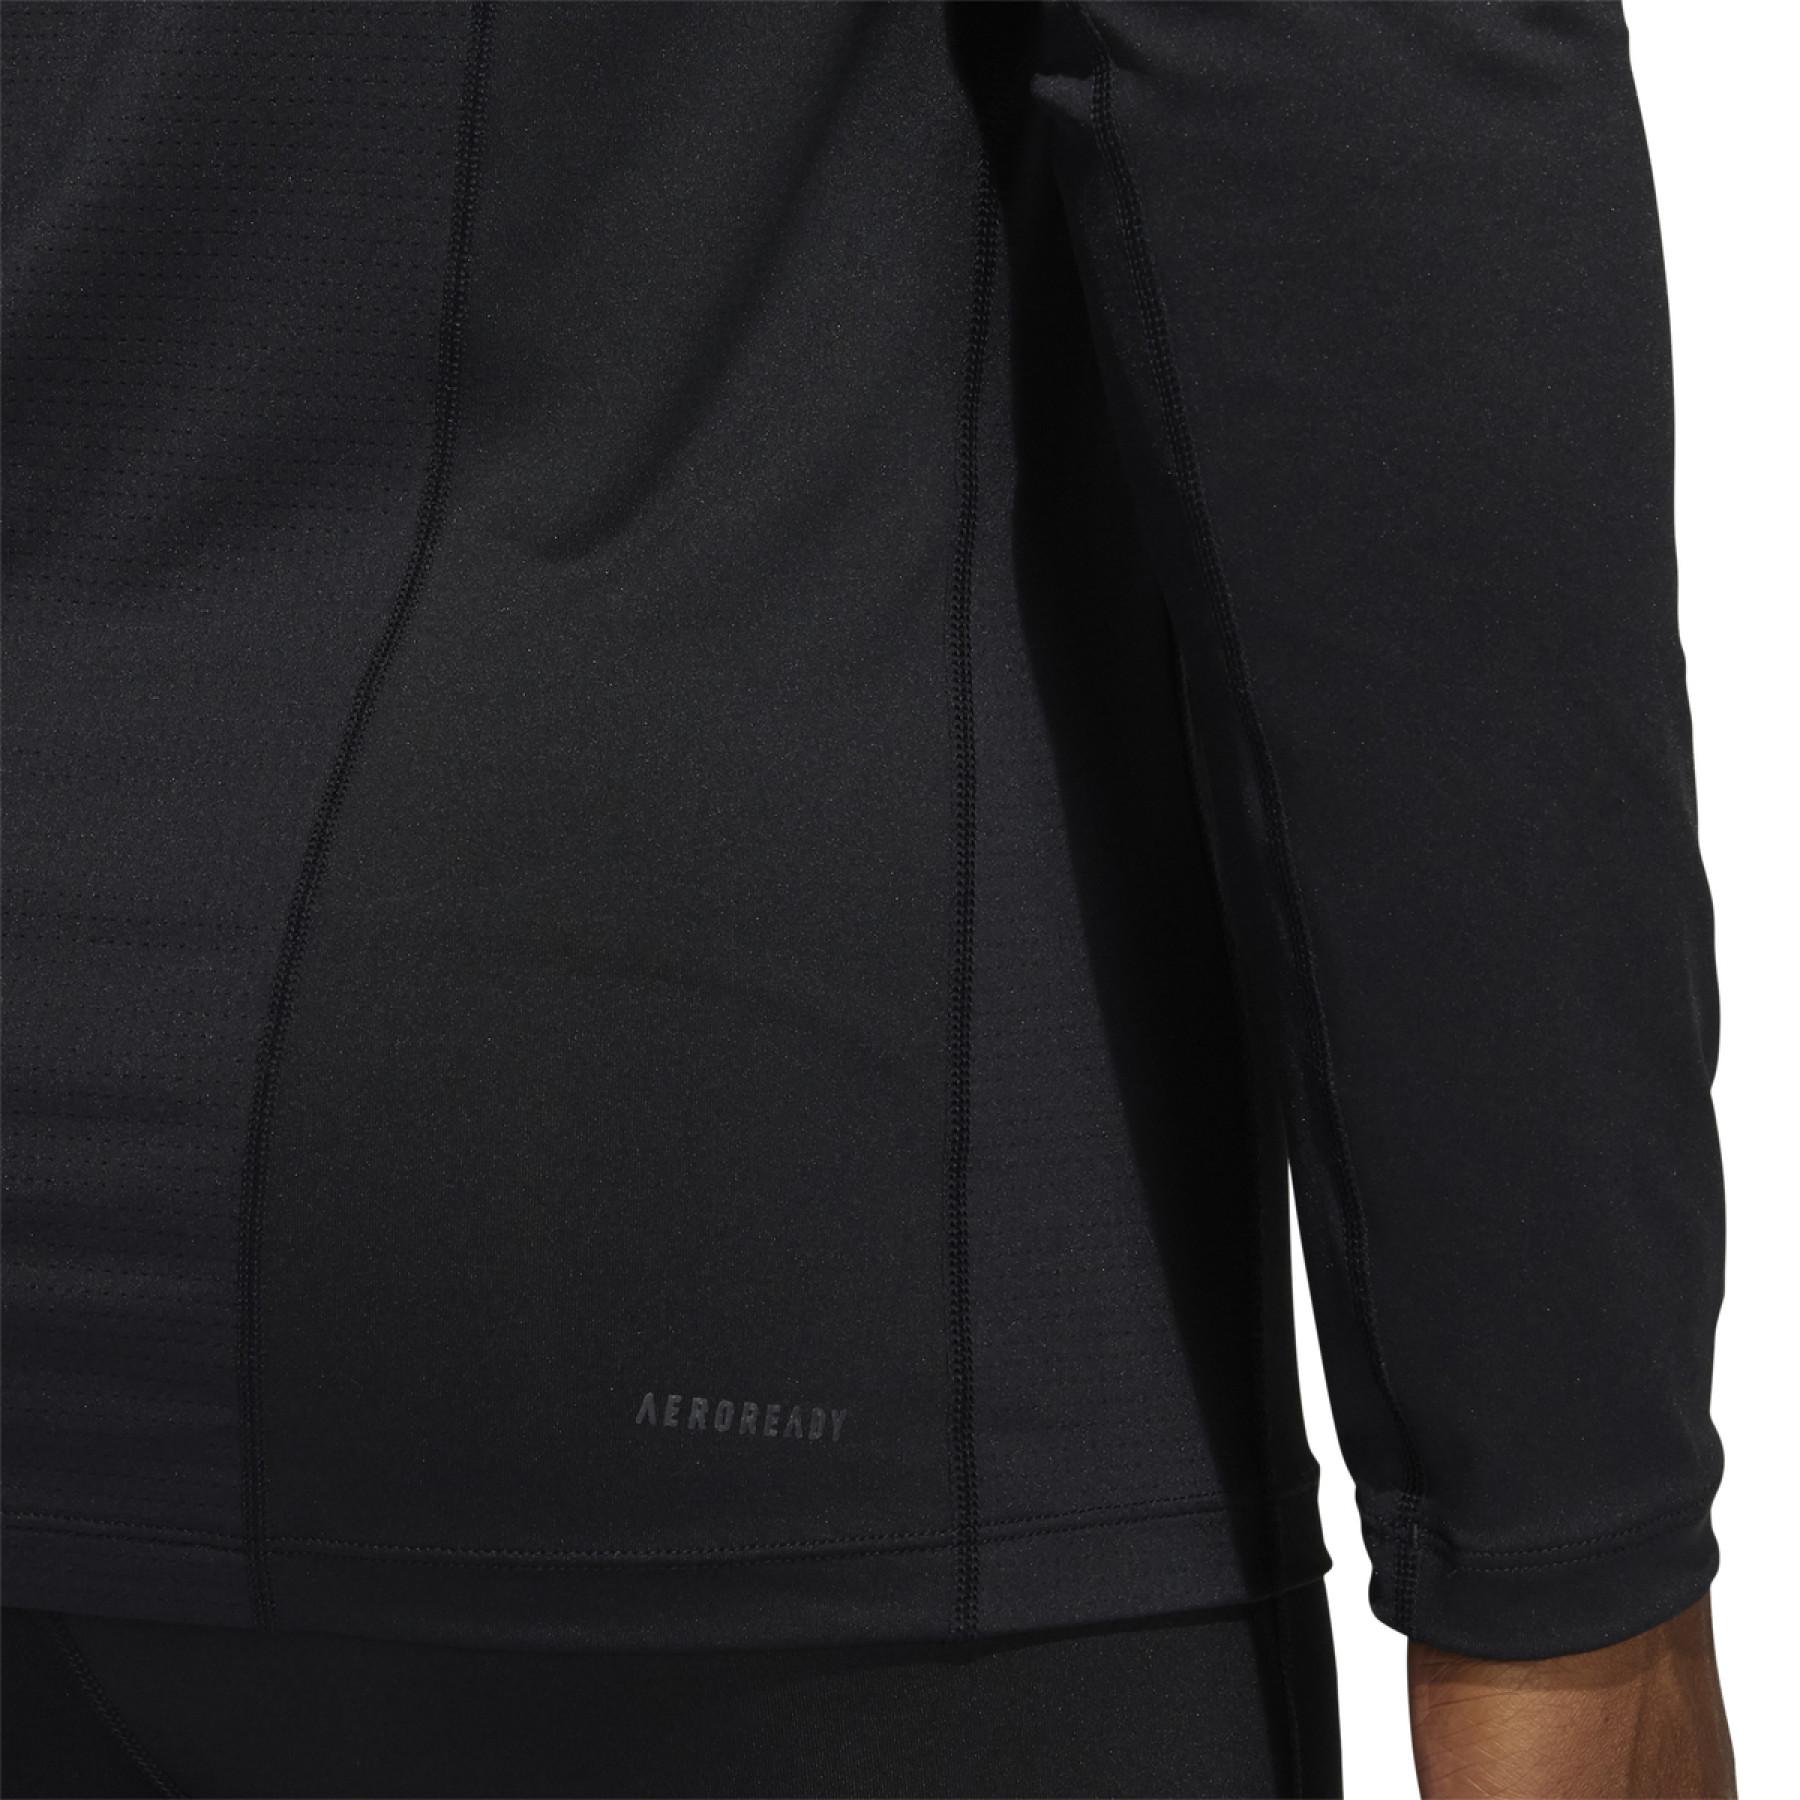 Long sleeve T-shirt adidas Techfit Compression